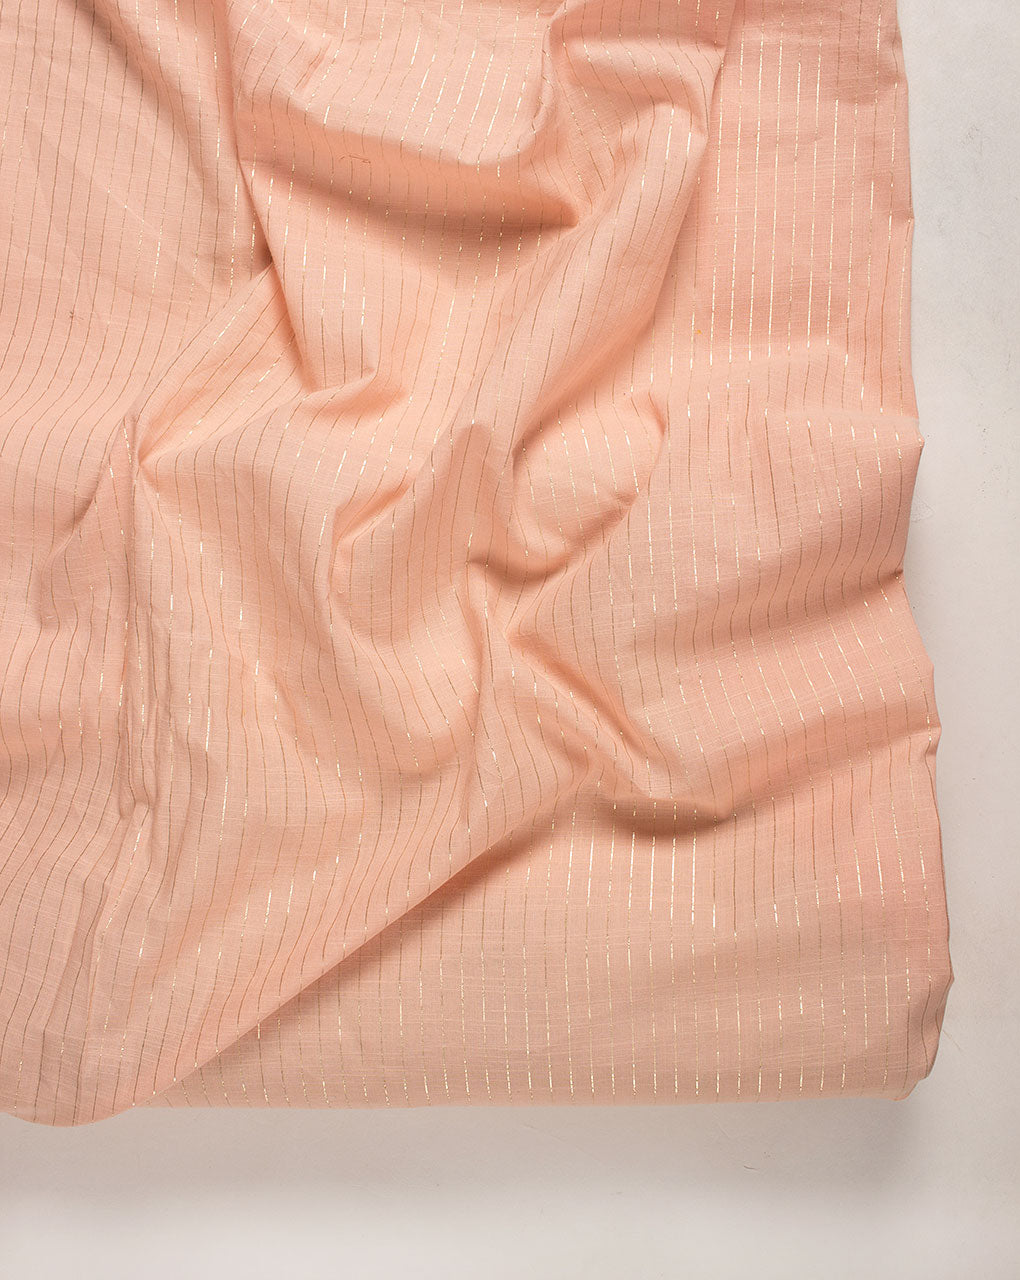 Lurex Loom Textured Cotton Fabric